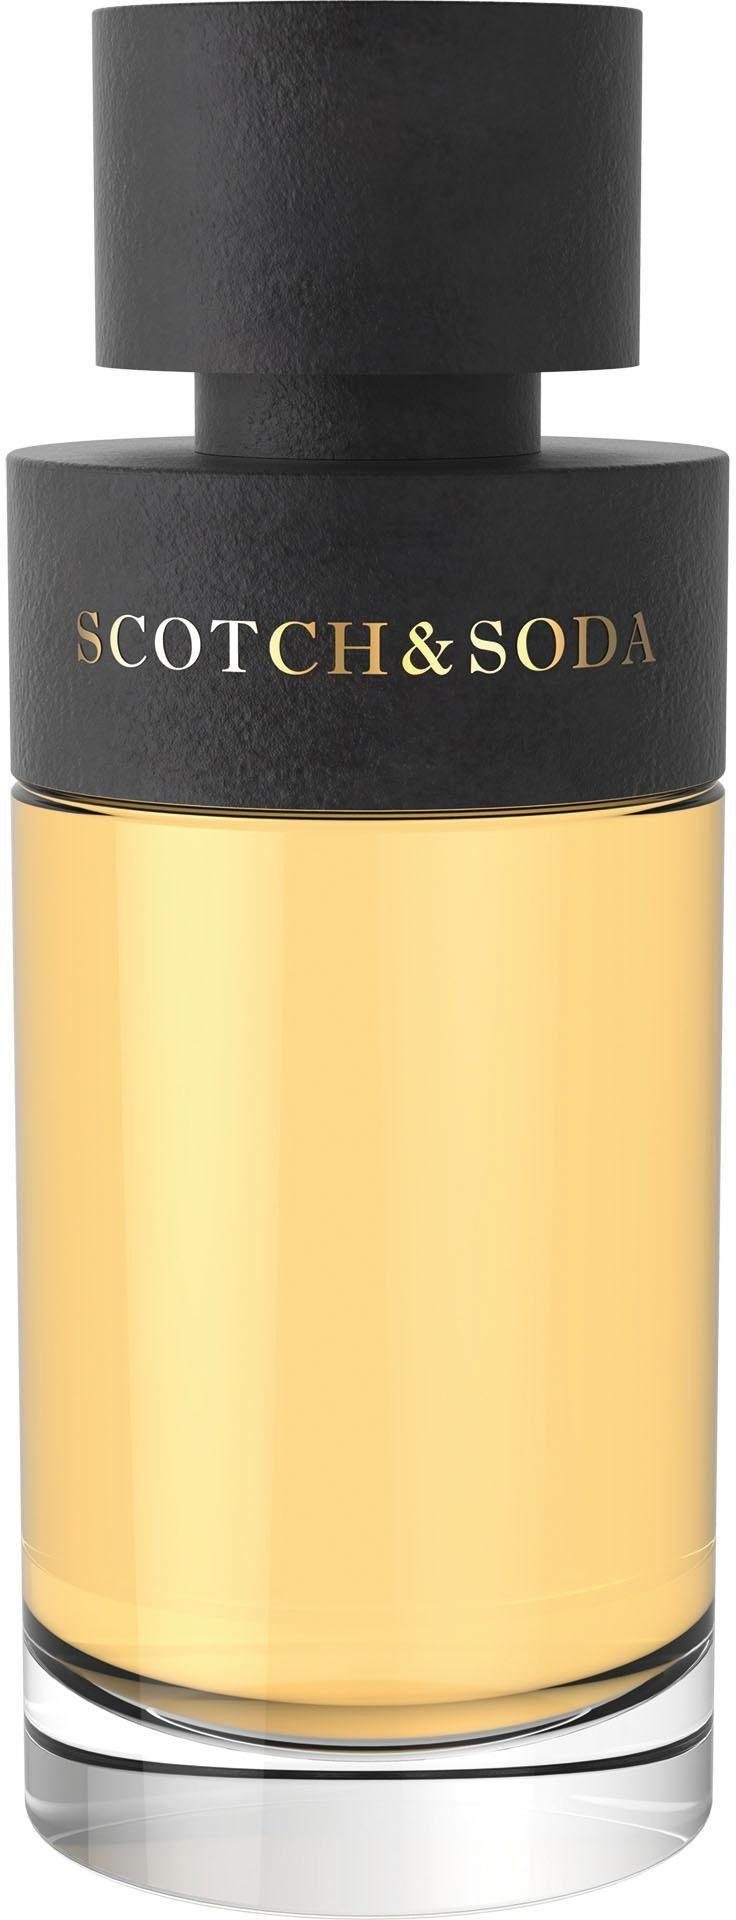 Scotch & Soda Eau de Men Toilette